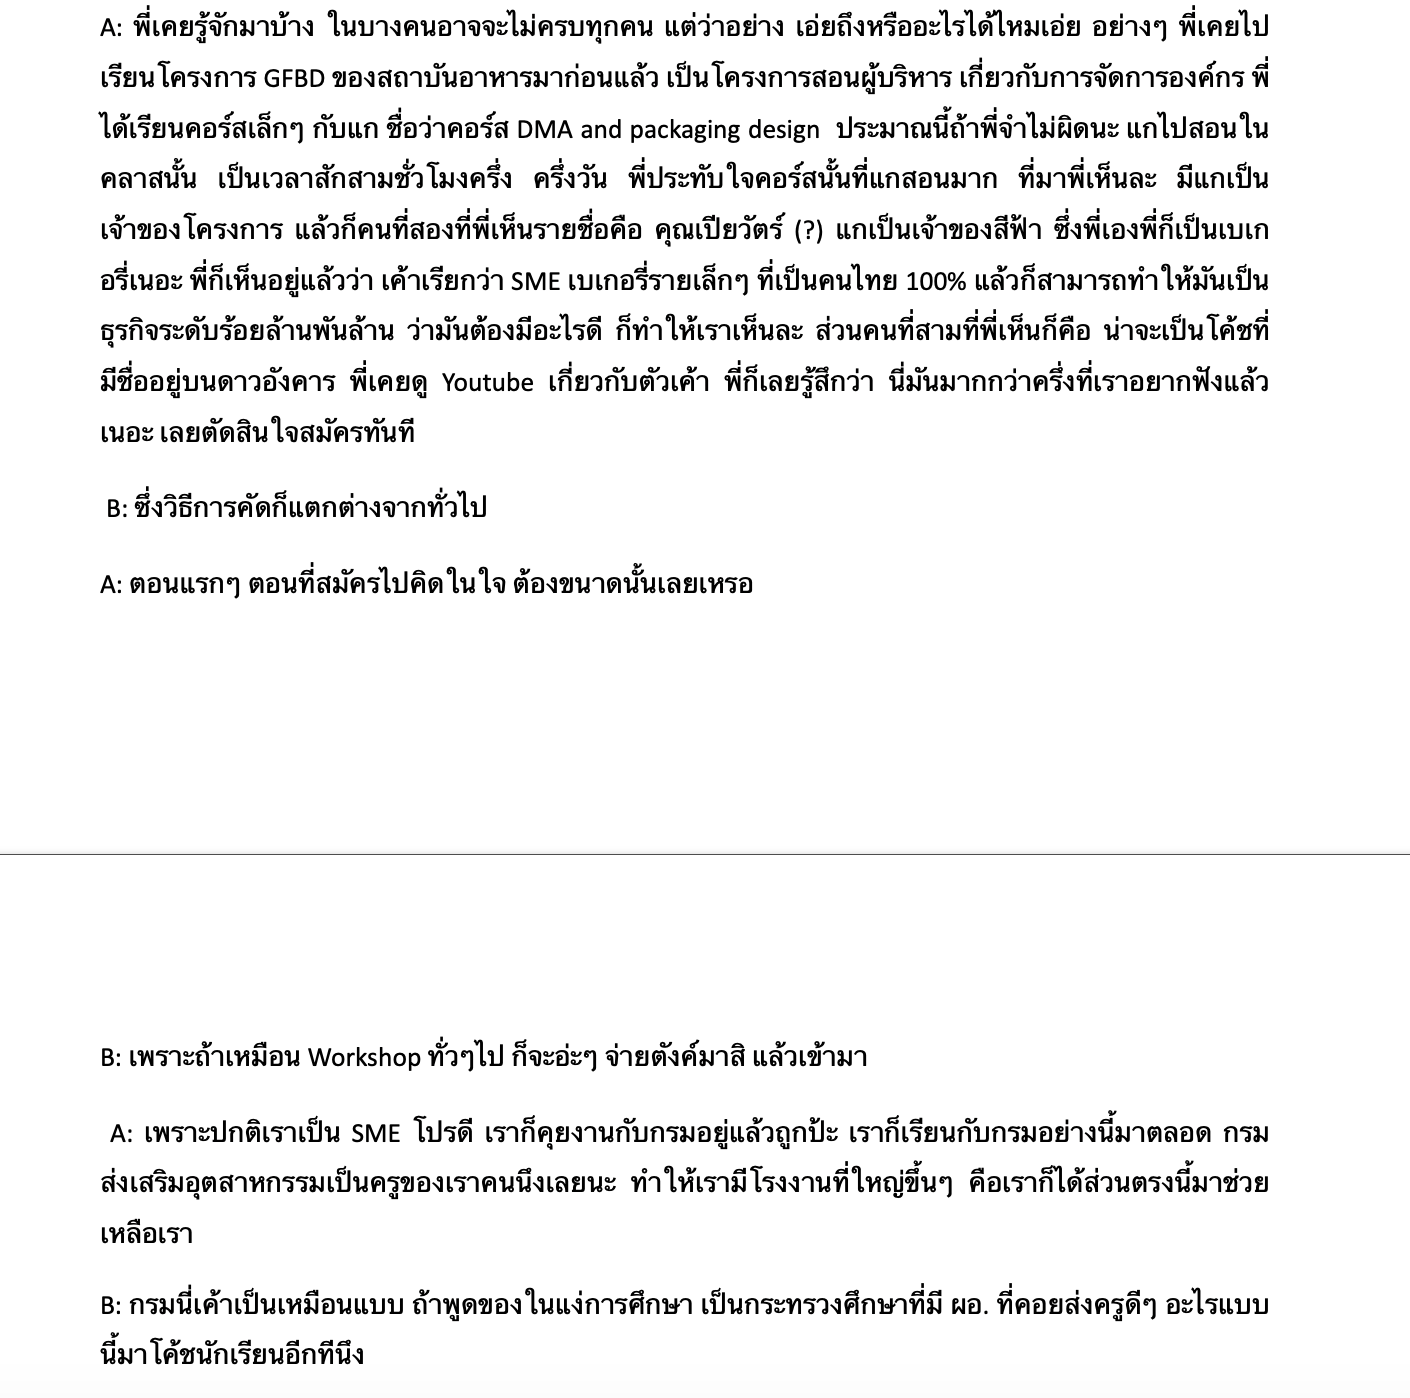 transcription in Thai